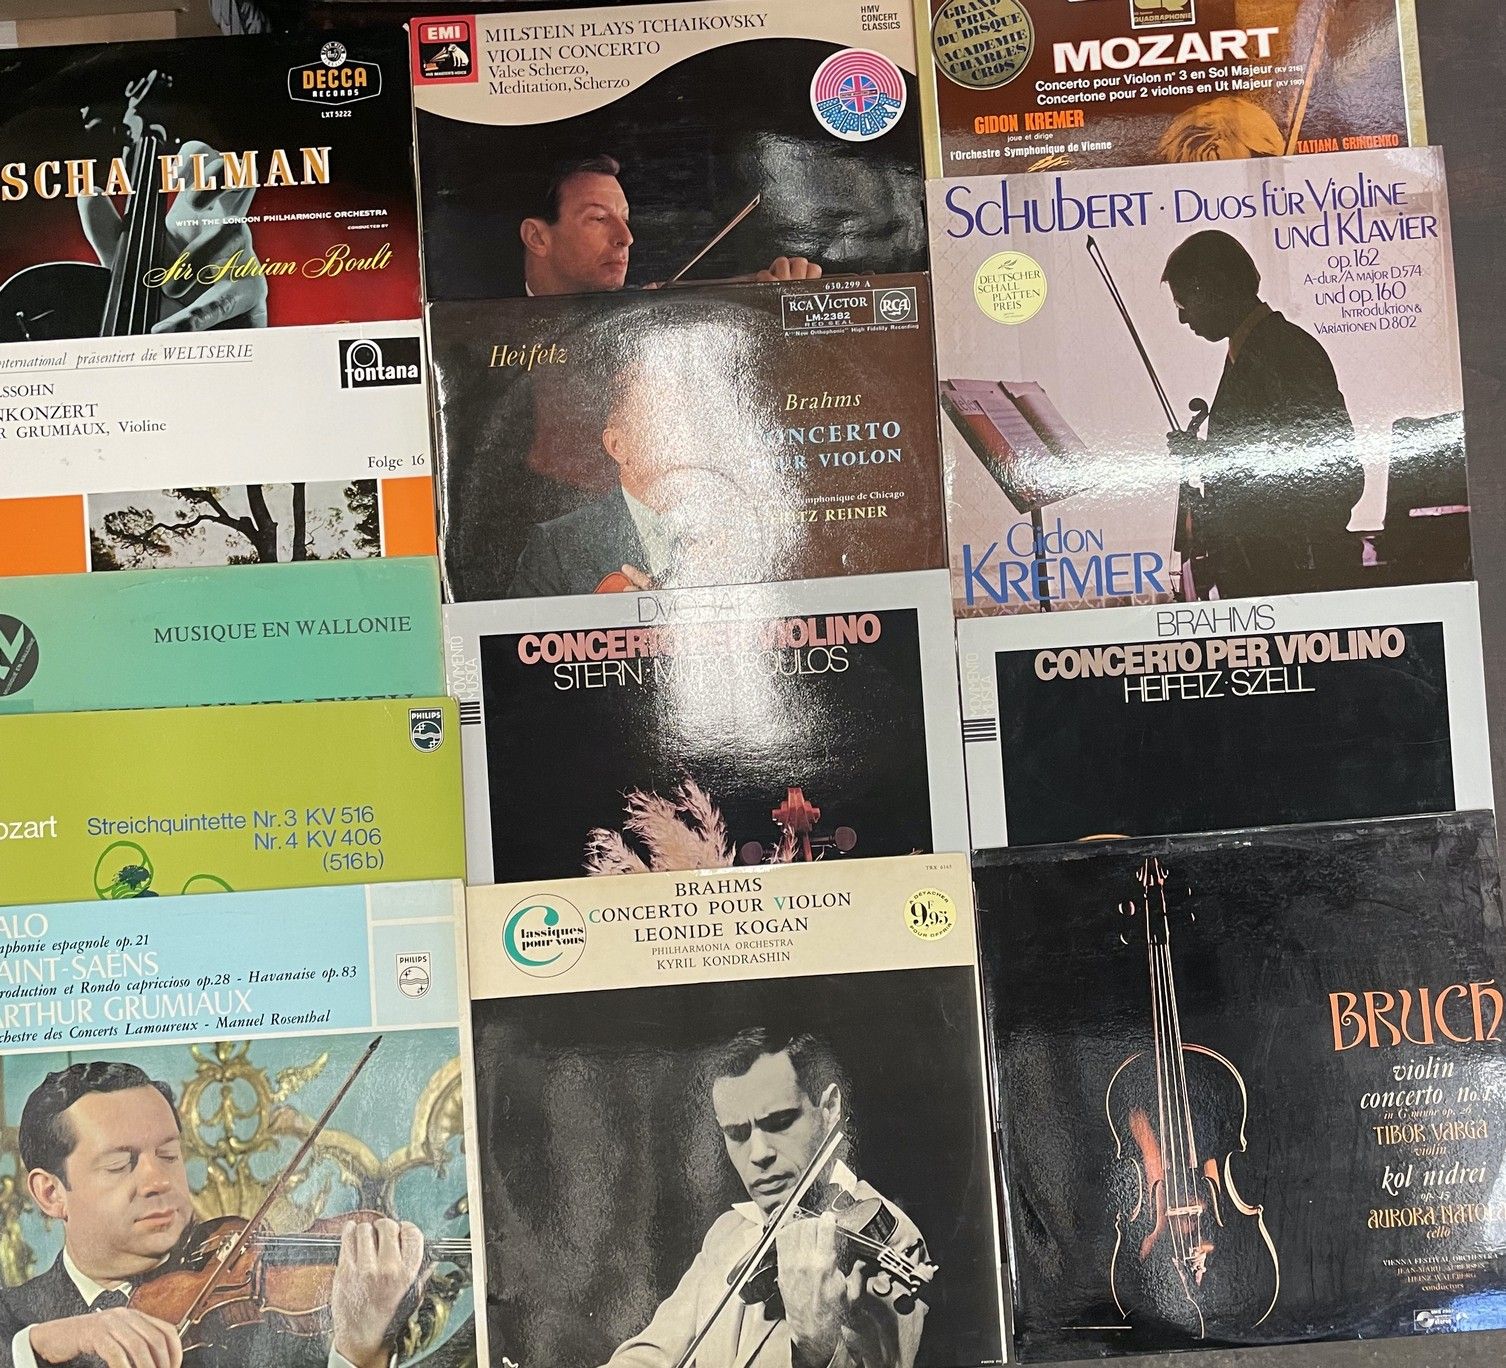 Violon Dreizehn LPs - Violine, verschiedene Interpreten, verschiedene Labels

VG&hellip;